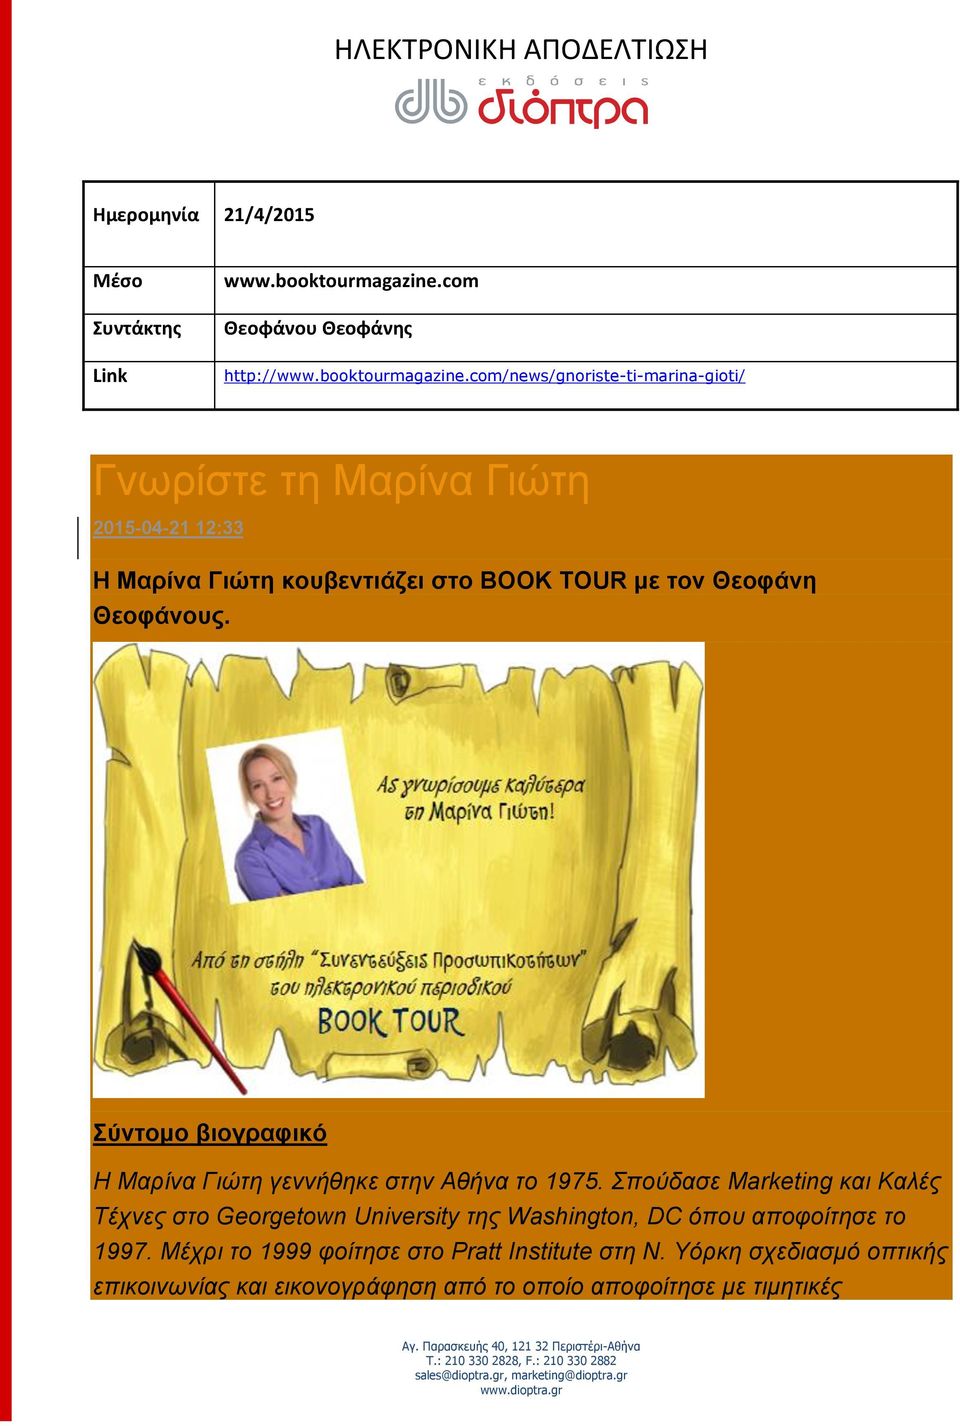 com/news/gnoriste-ti-marina-gioti/ Γνωρίστε τη Μαρίνα Γιώτη 2015-04-21 12:33 Η Μαρίνα Γιώτη κουβεντιάζει στο BOOK TOUR με τον Θεοφάνη